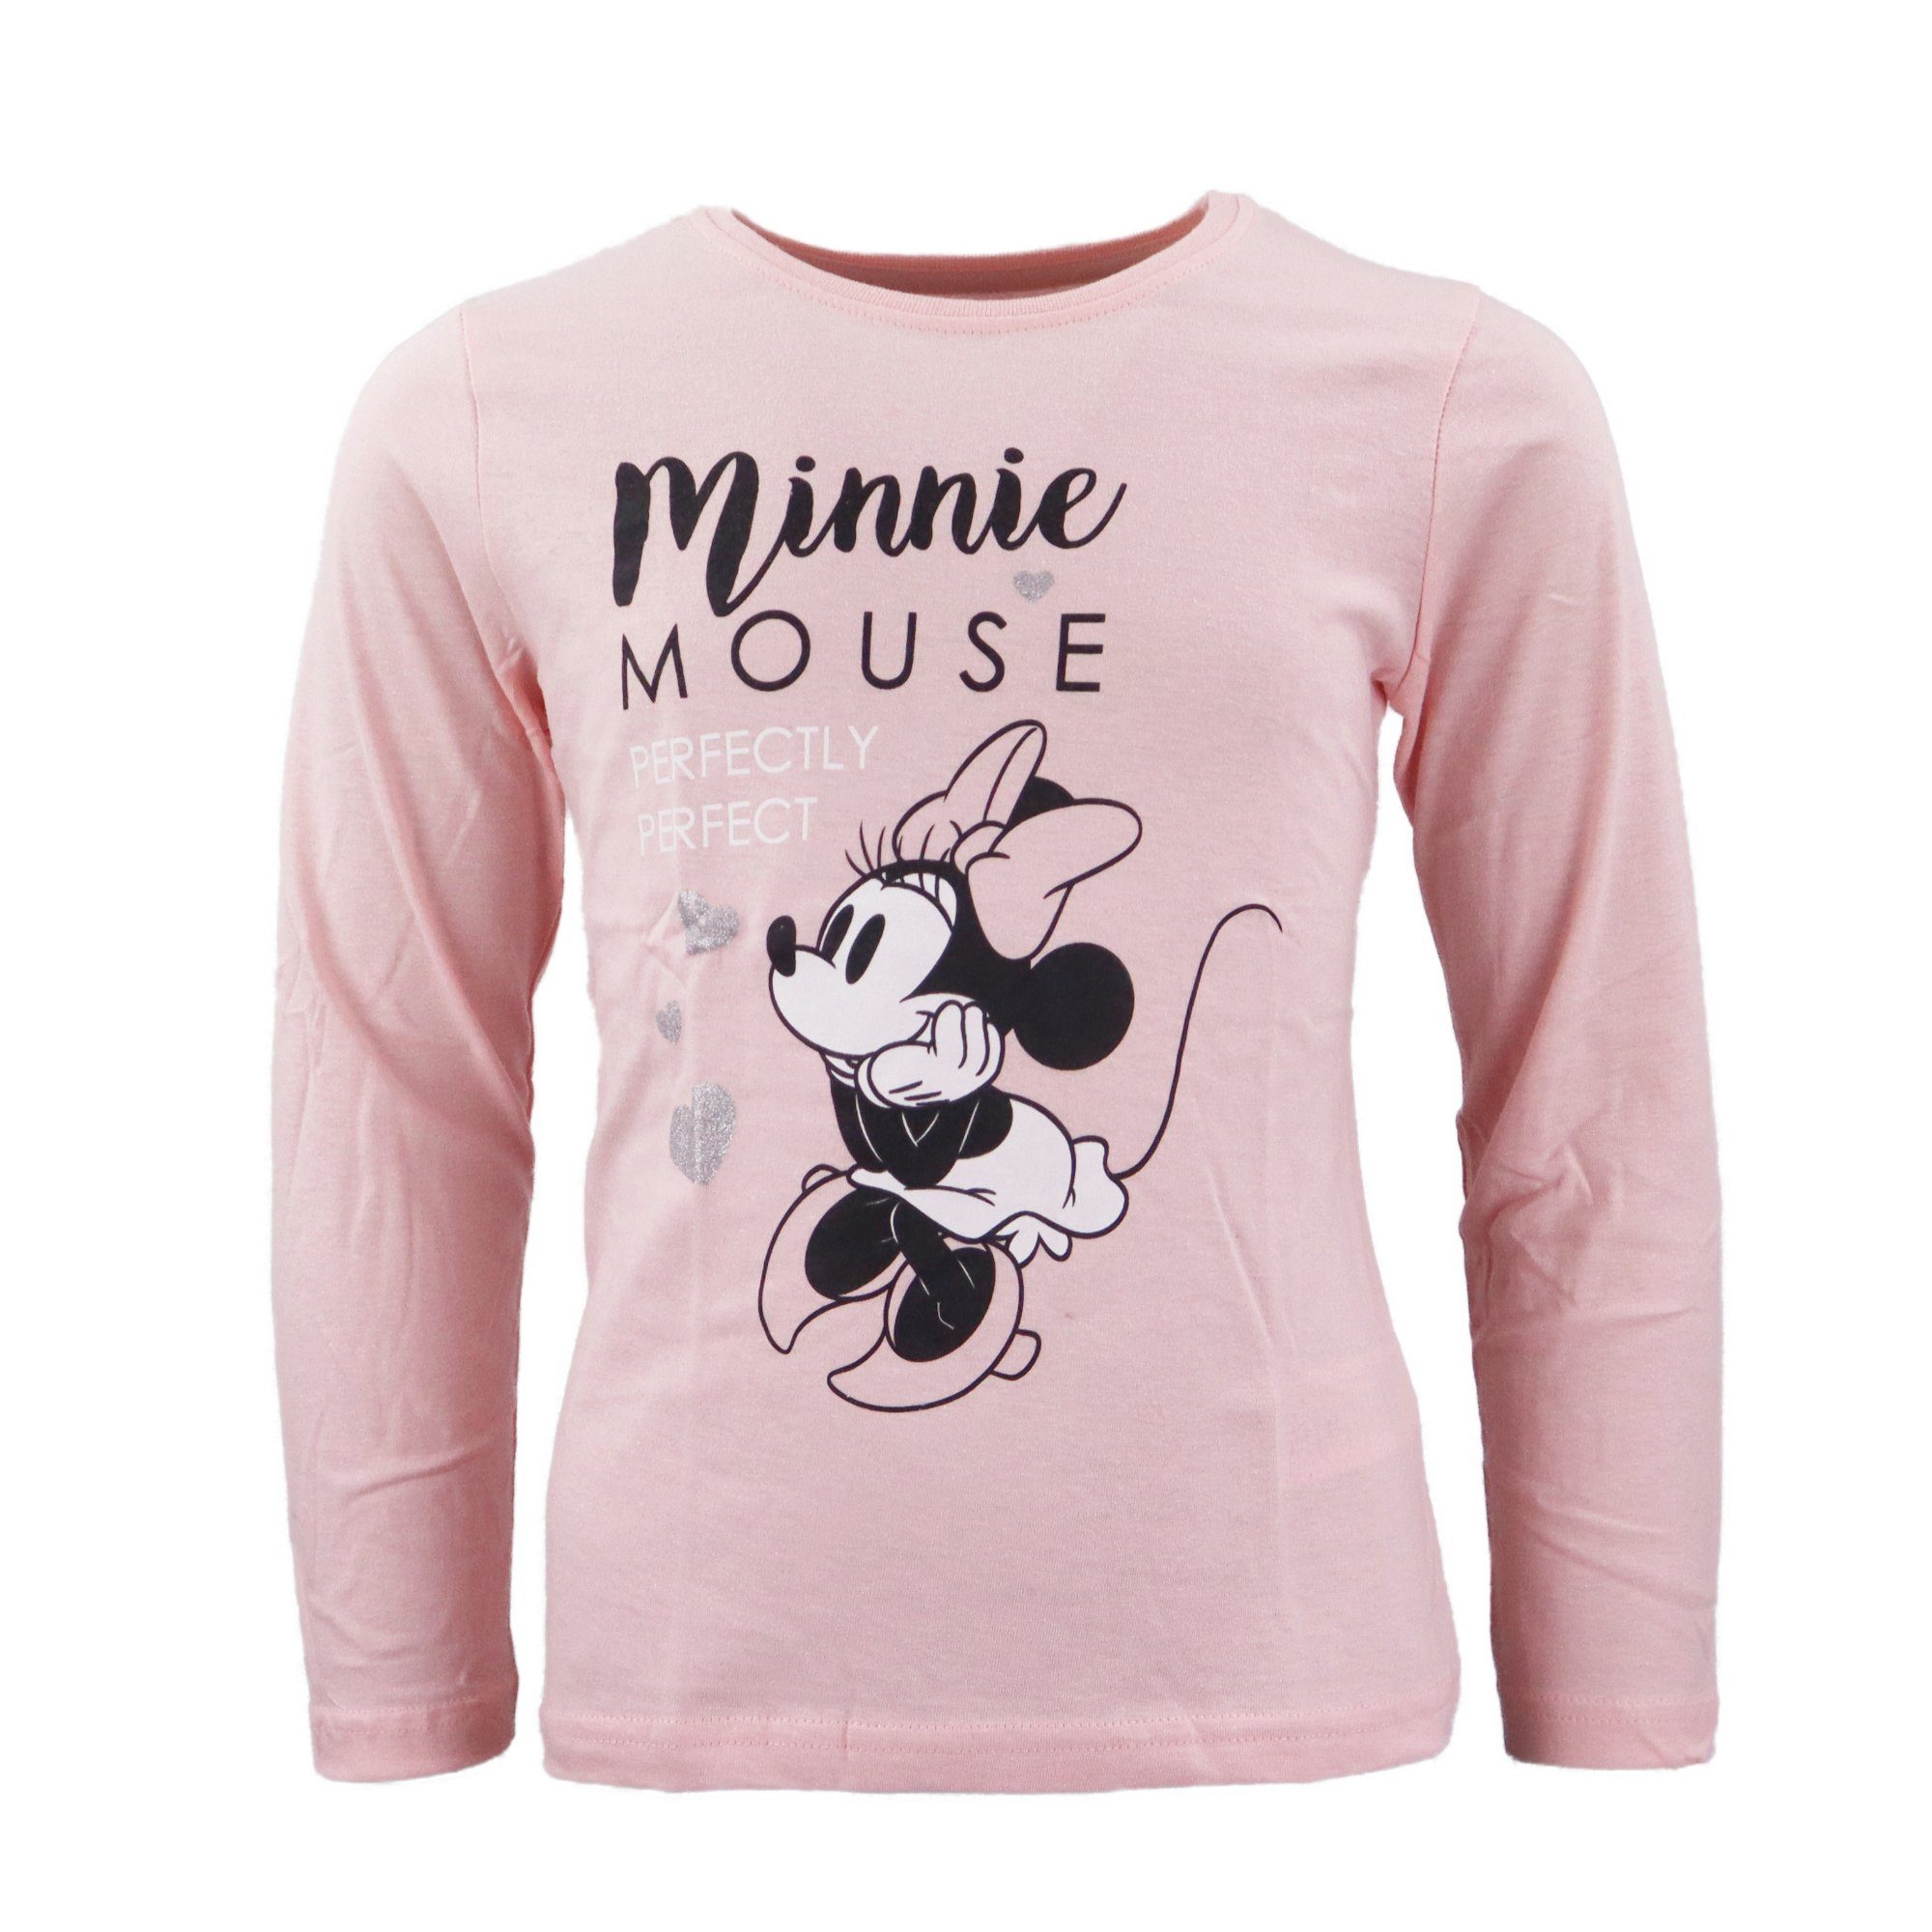 Disney Minnie Mouse Langarmshirt 100% Rosa Kinder Mädchen 98 Baumwolle bis Maus Minnie Gr. 128, Shirt